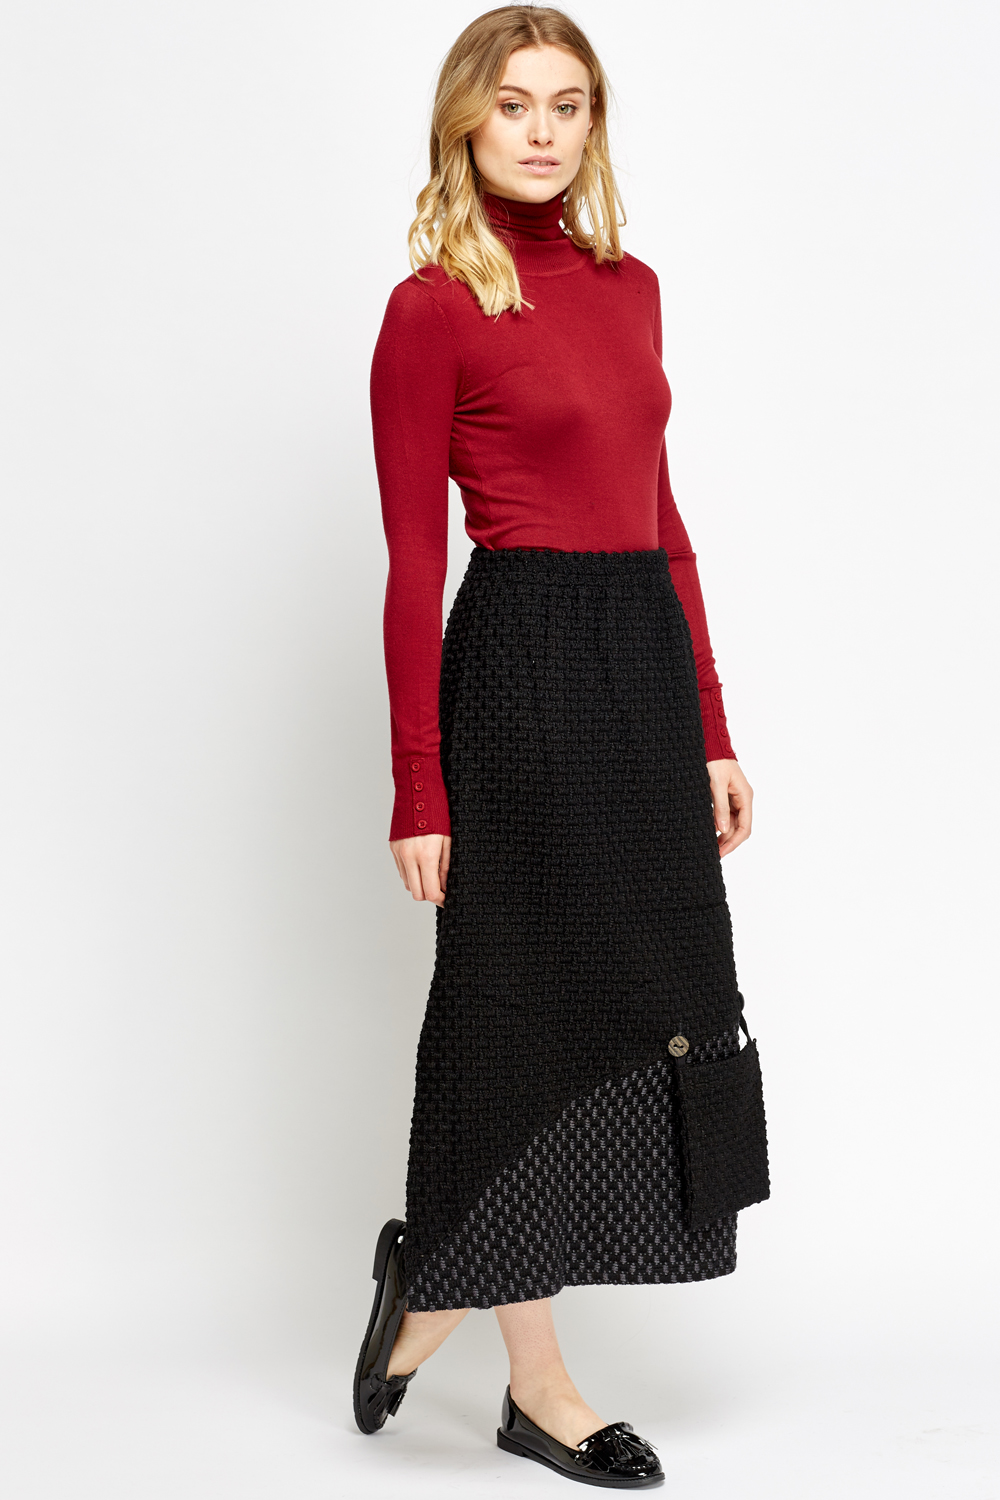 Bobble Knit Midi Front Pocket Skirt - Just $7